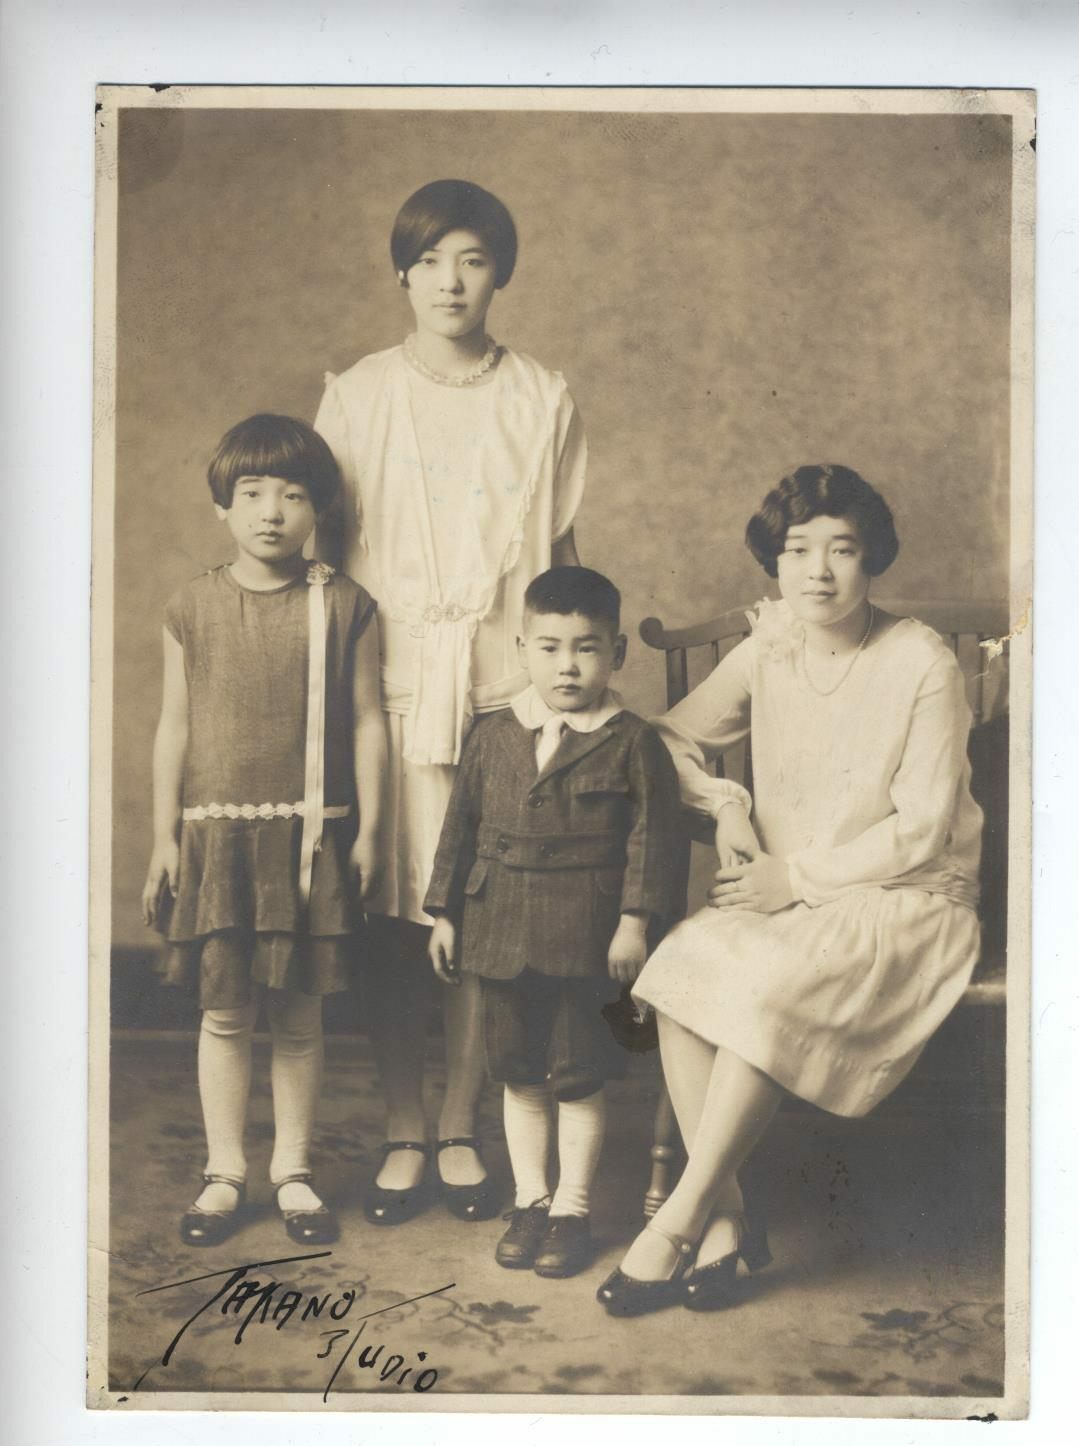 Rare vintage Japanese American Seattle Washington photo signed Takano Studio 